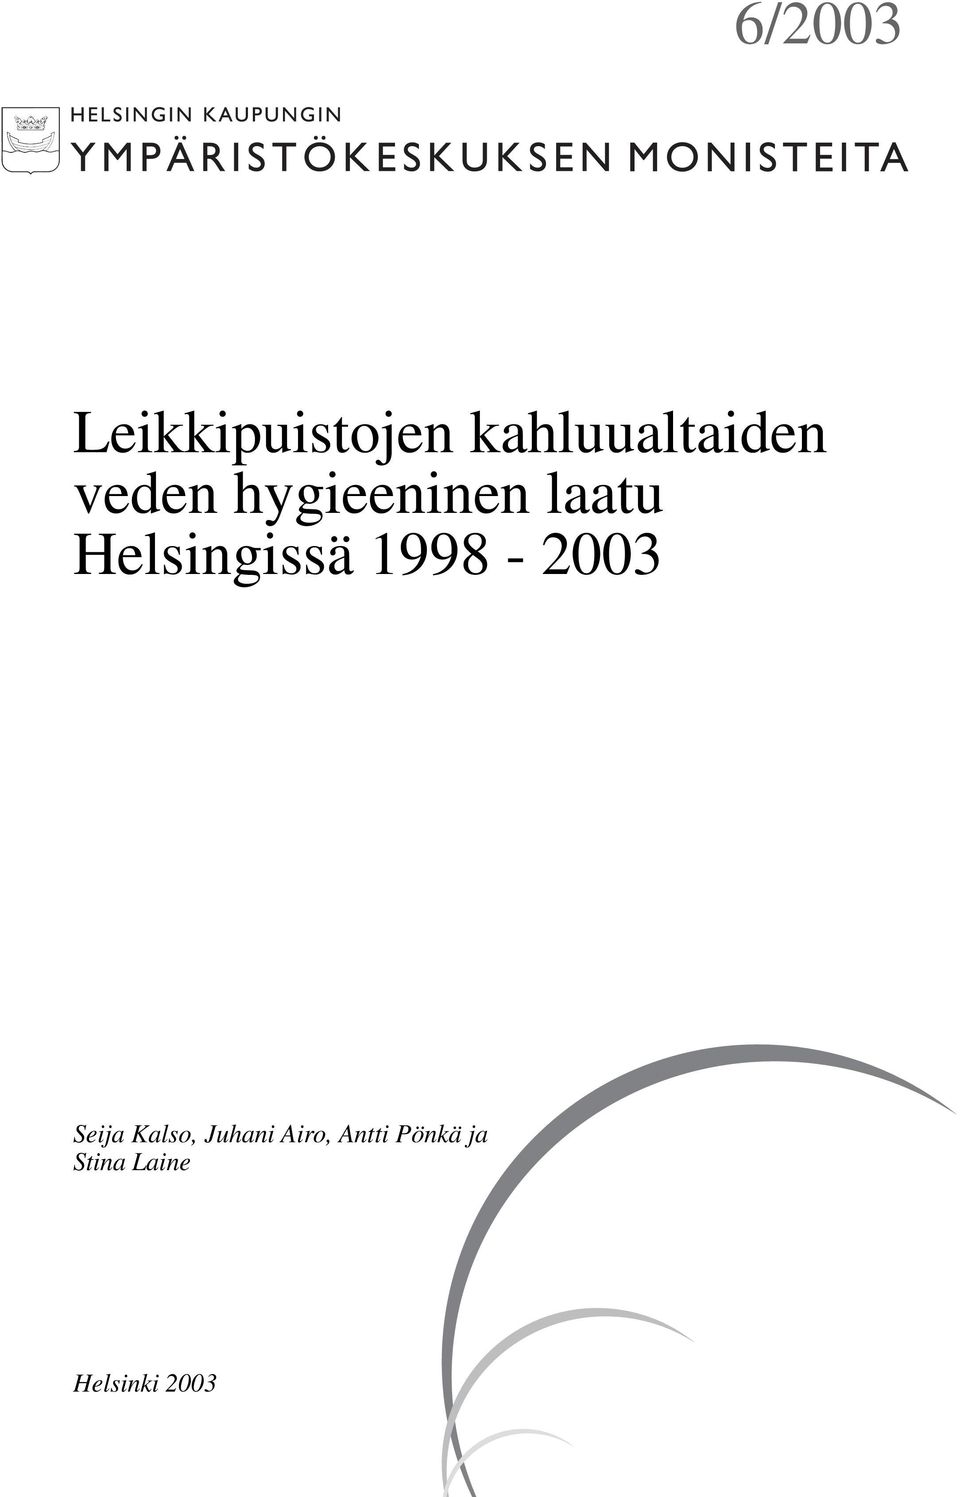 1998-2003 Seija Kalso, Juhani Airo,